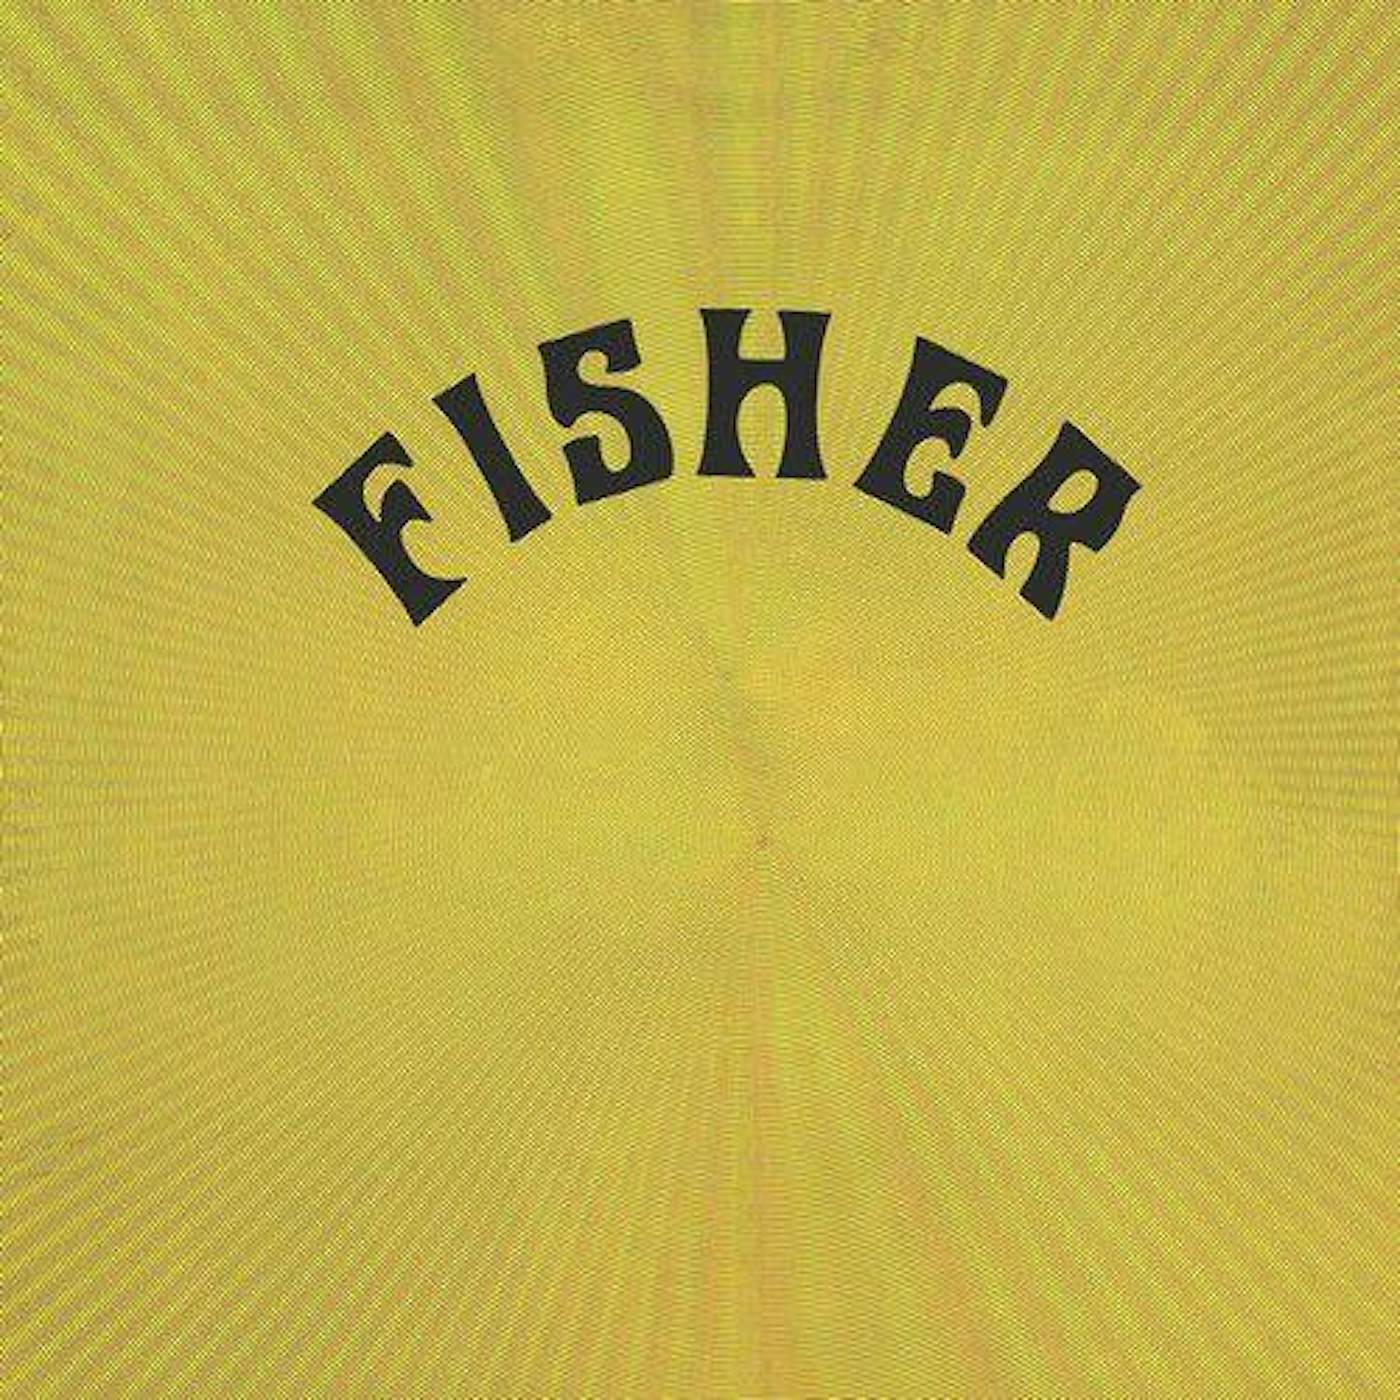  Fisher Vinyl Record